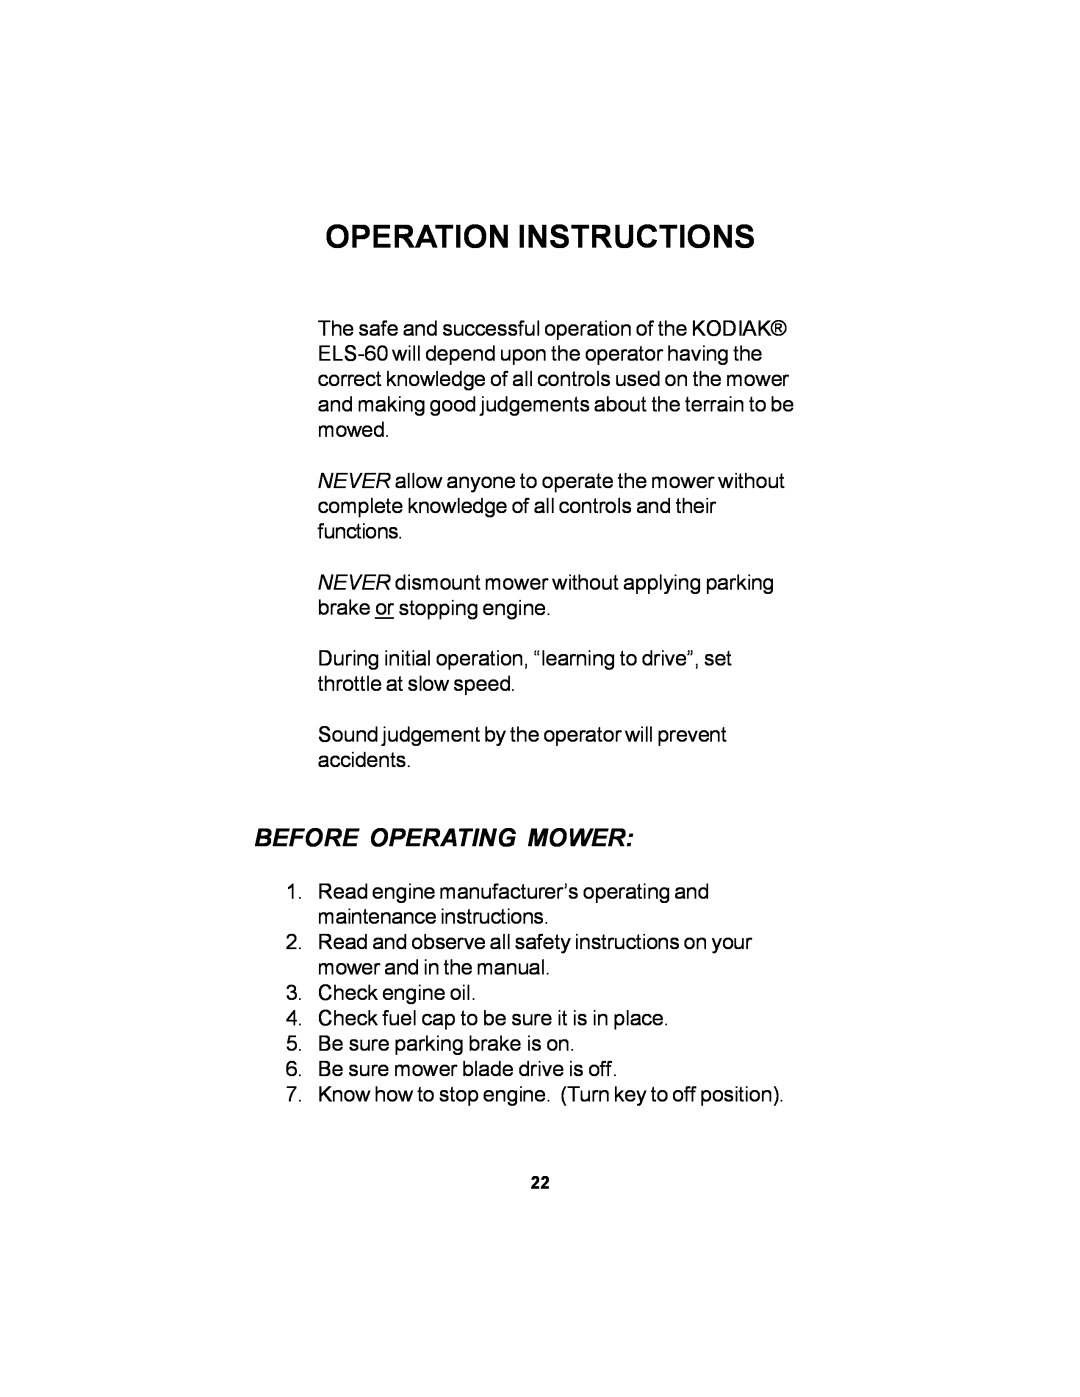 Dixon ELS 60 manual Operation Instructions, Before Operating Mower 